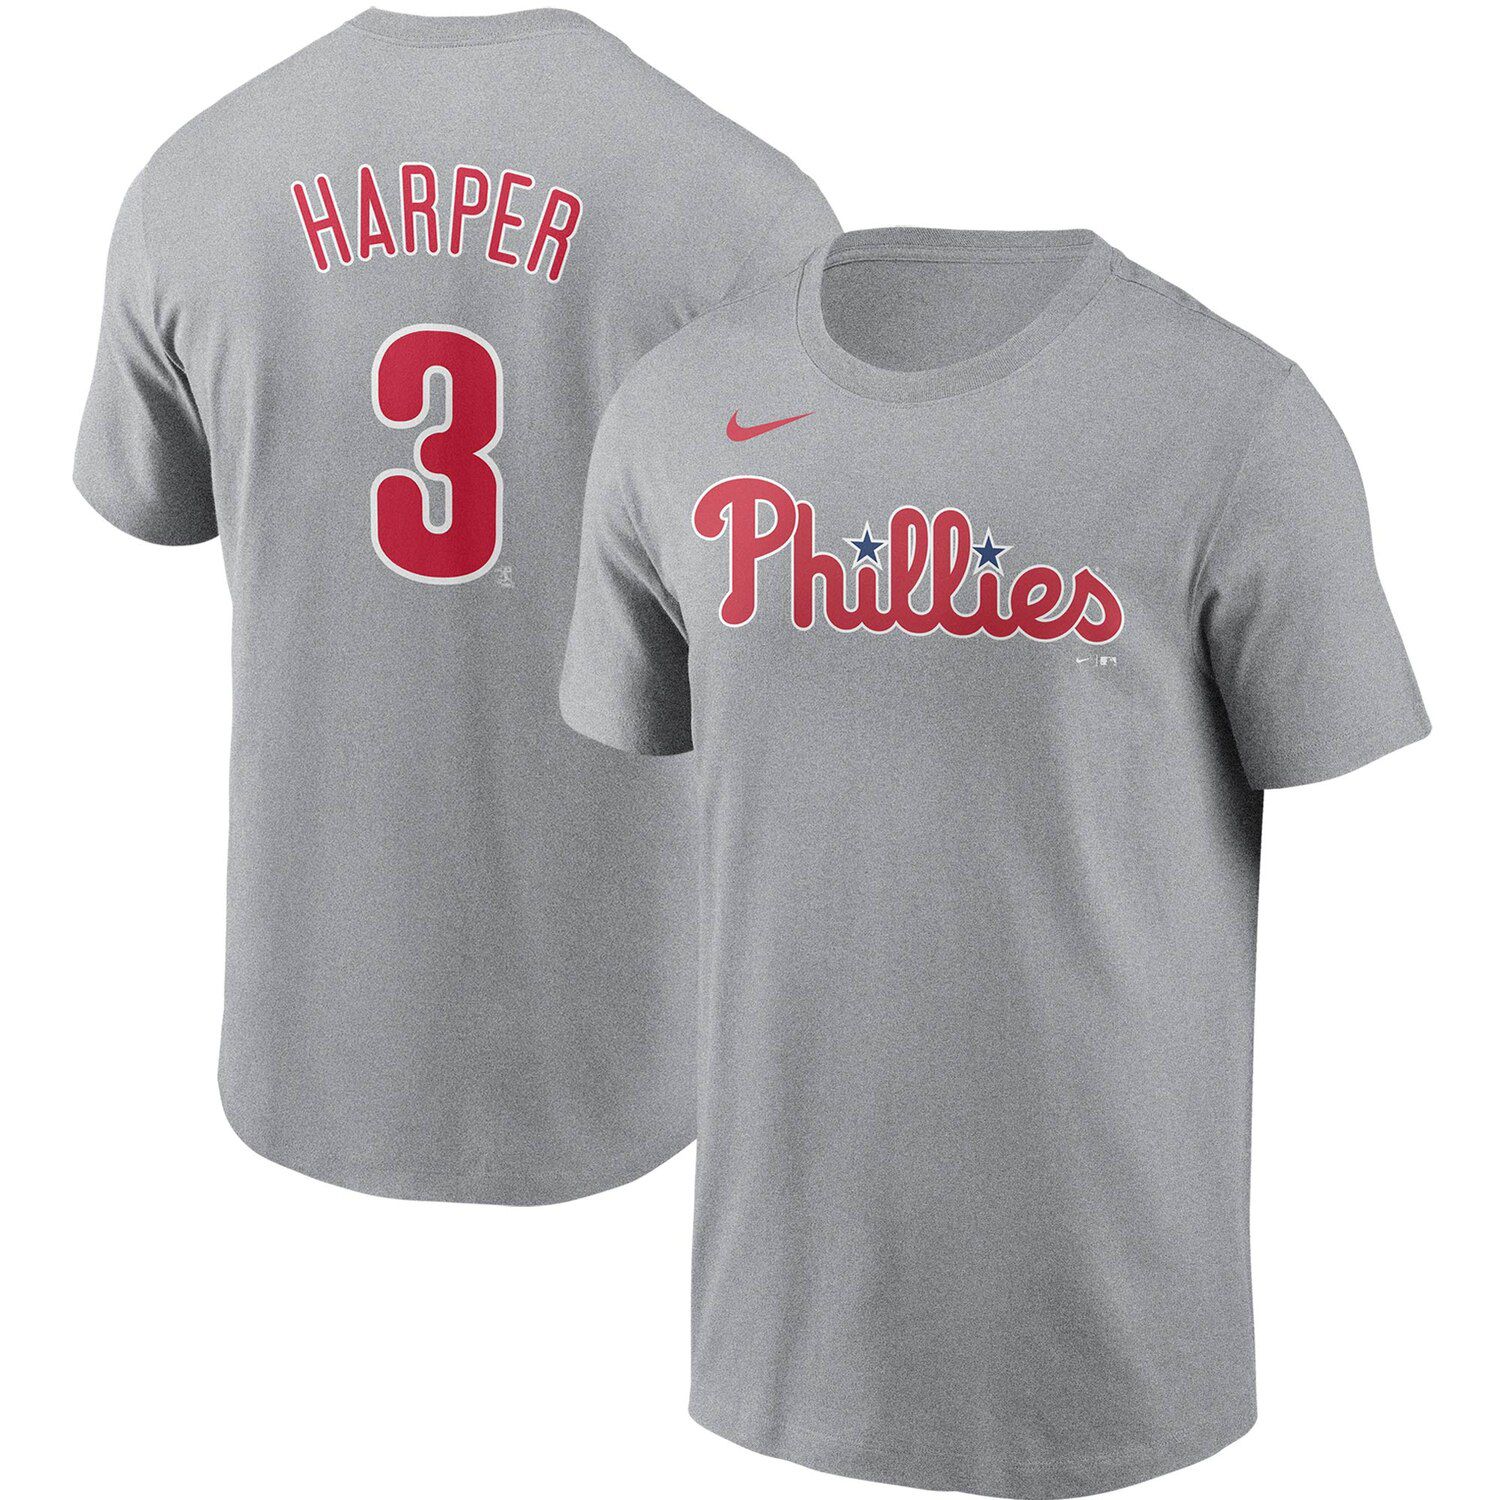 bryce harper shirt